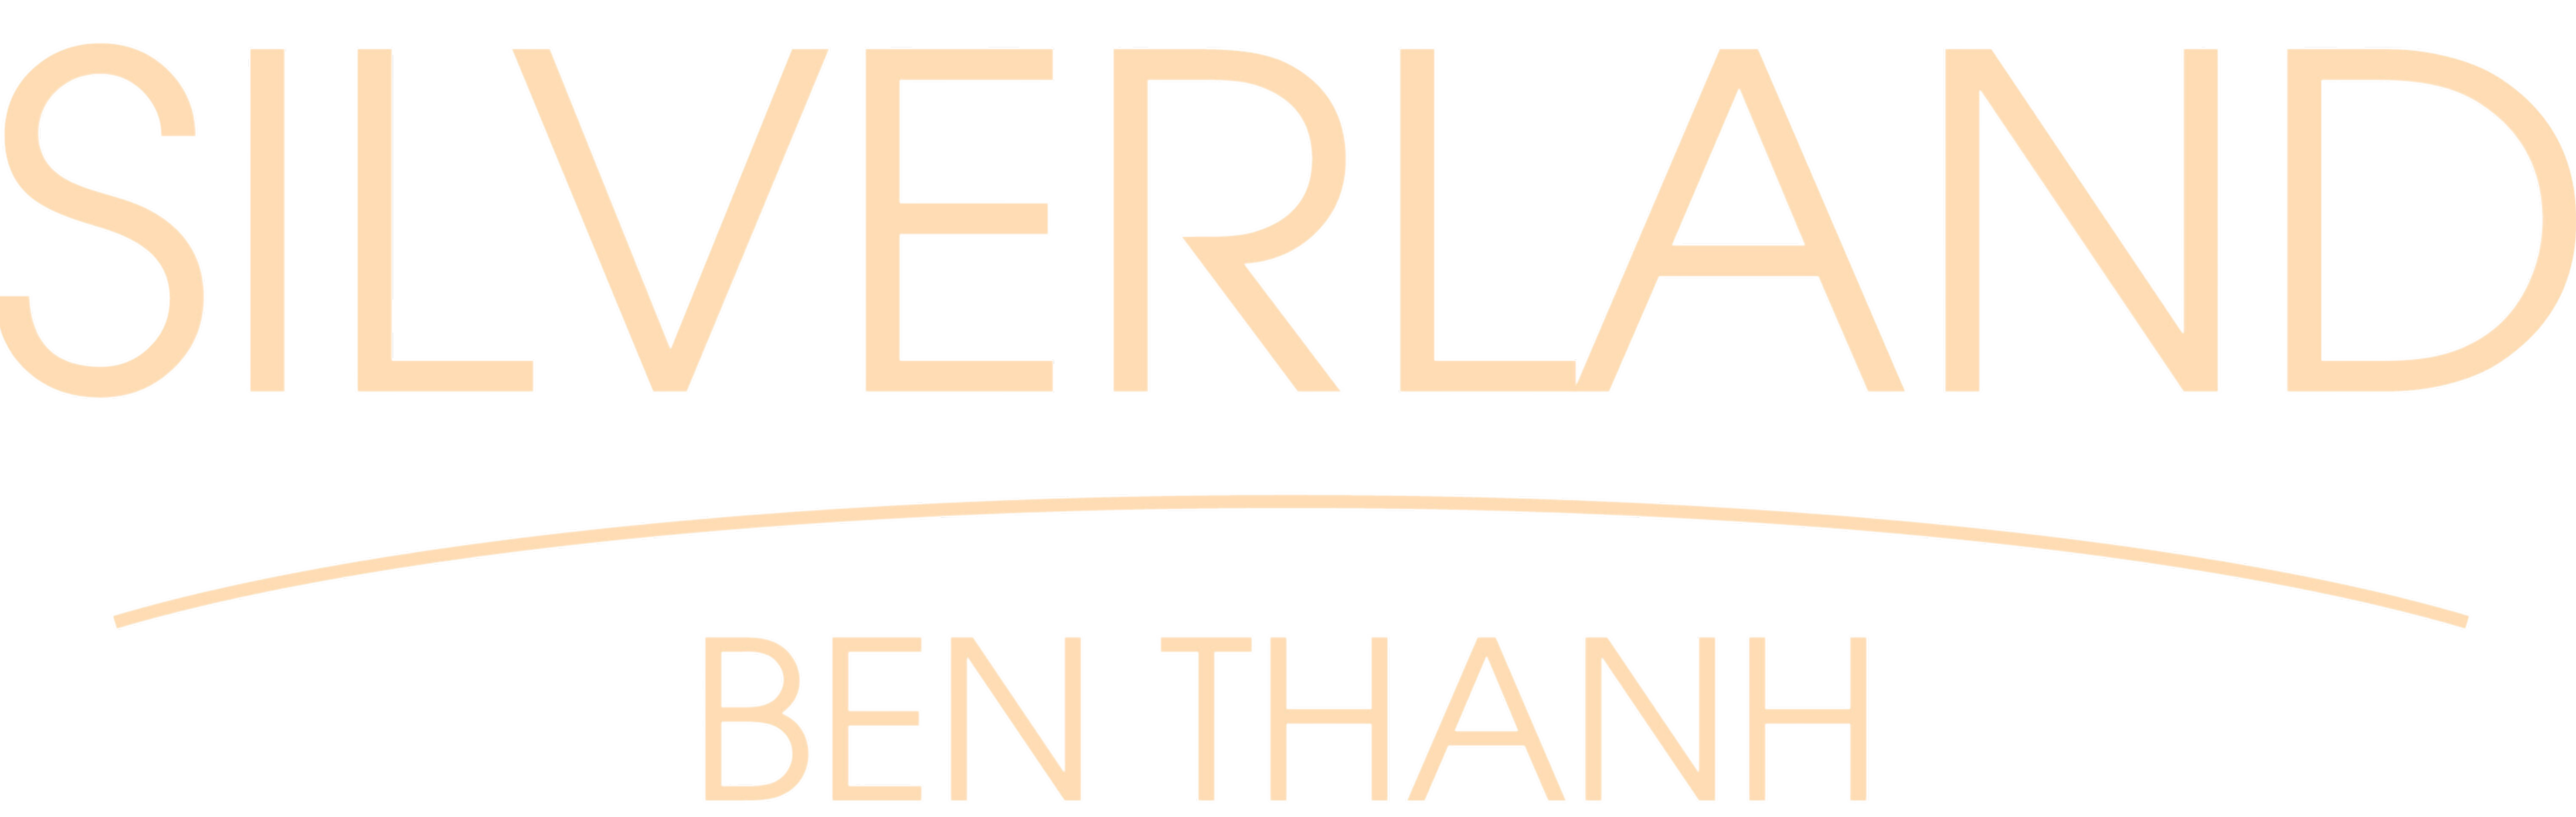 Silverland Ben Thanh Logo